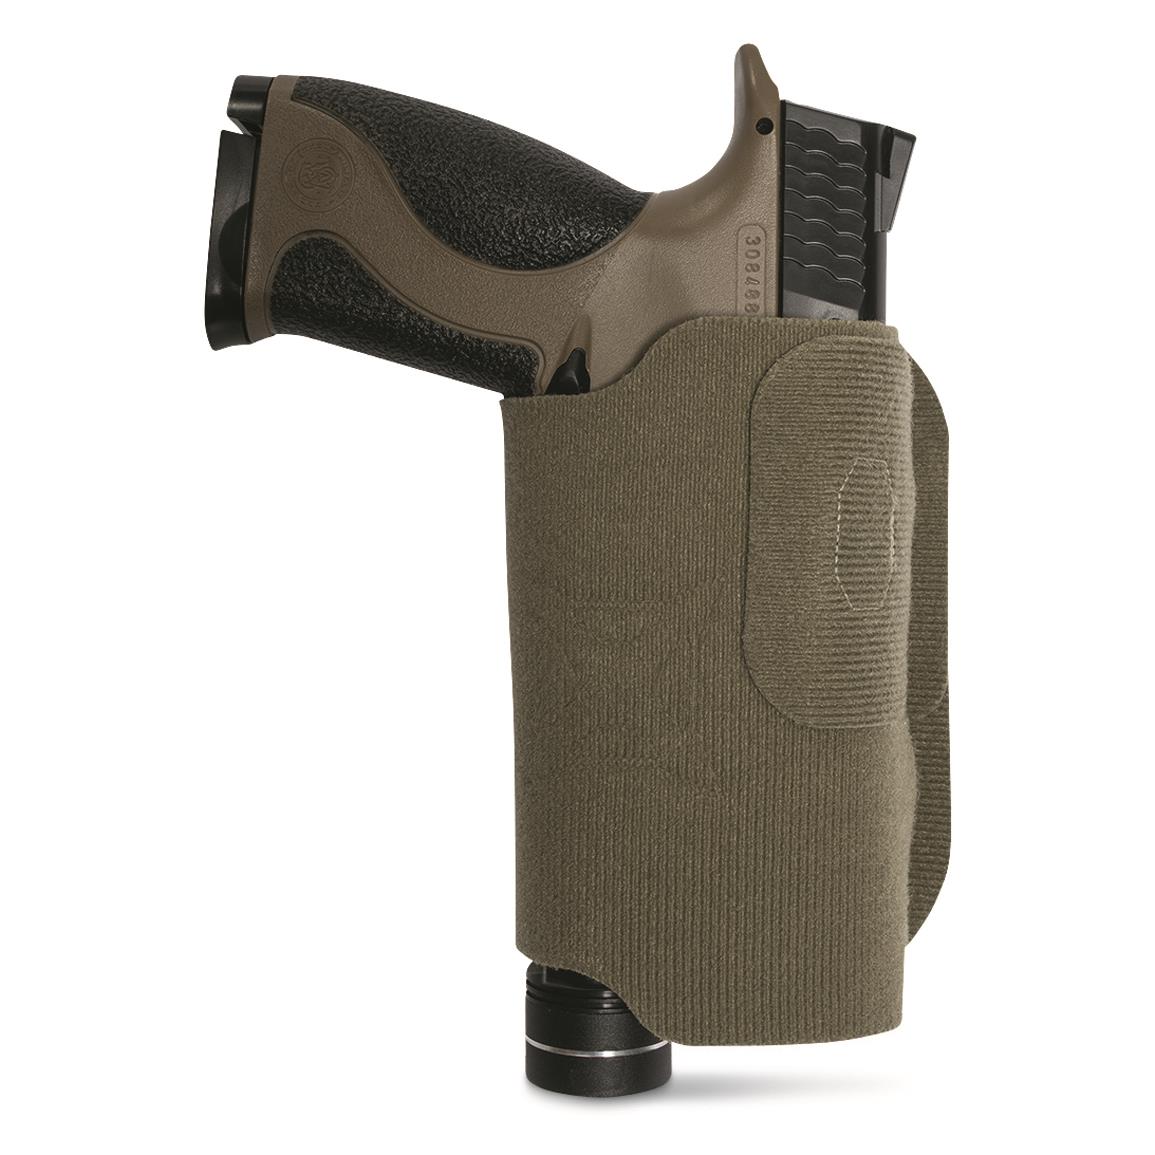 Wraps around your handgun for a completely custom fit, Desert Tan